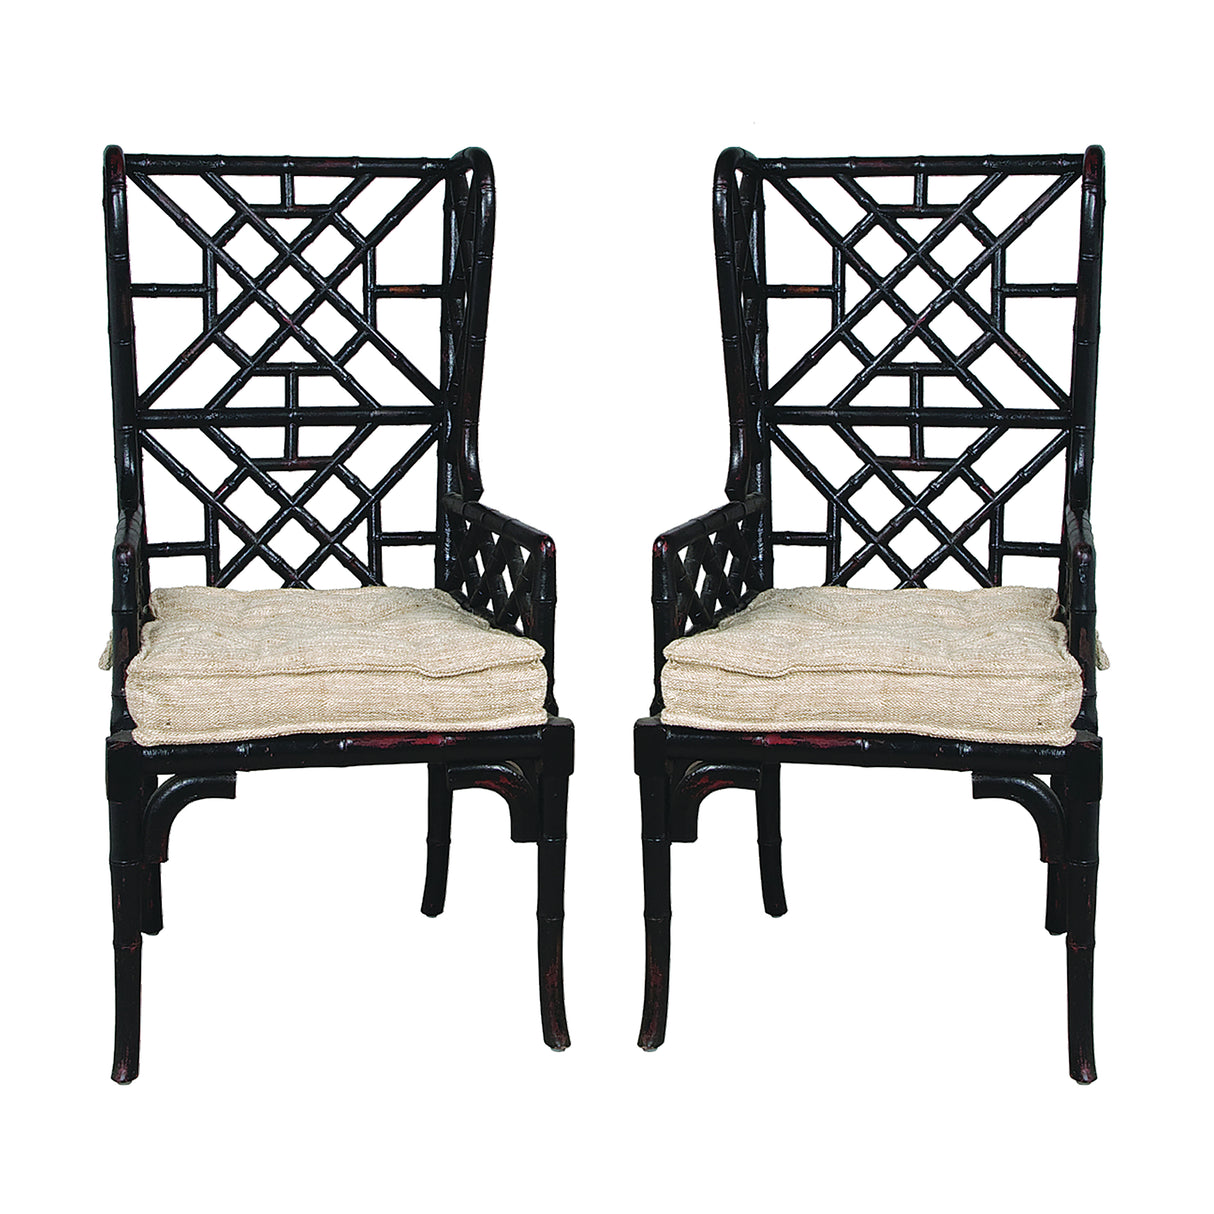 Elk 659522PWMLB Bamboo Chair - Set of 2 Black